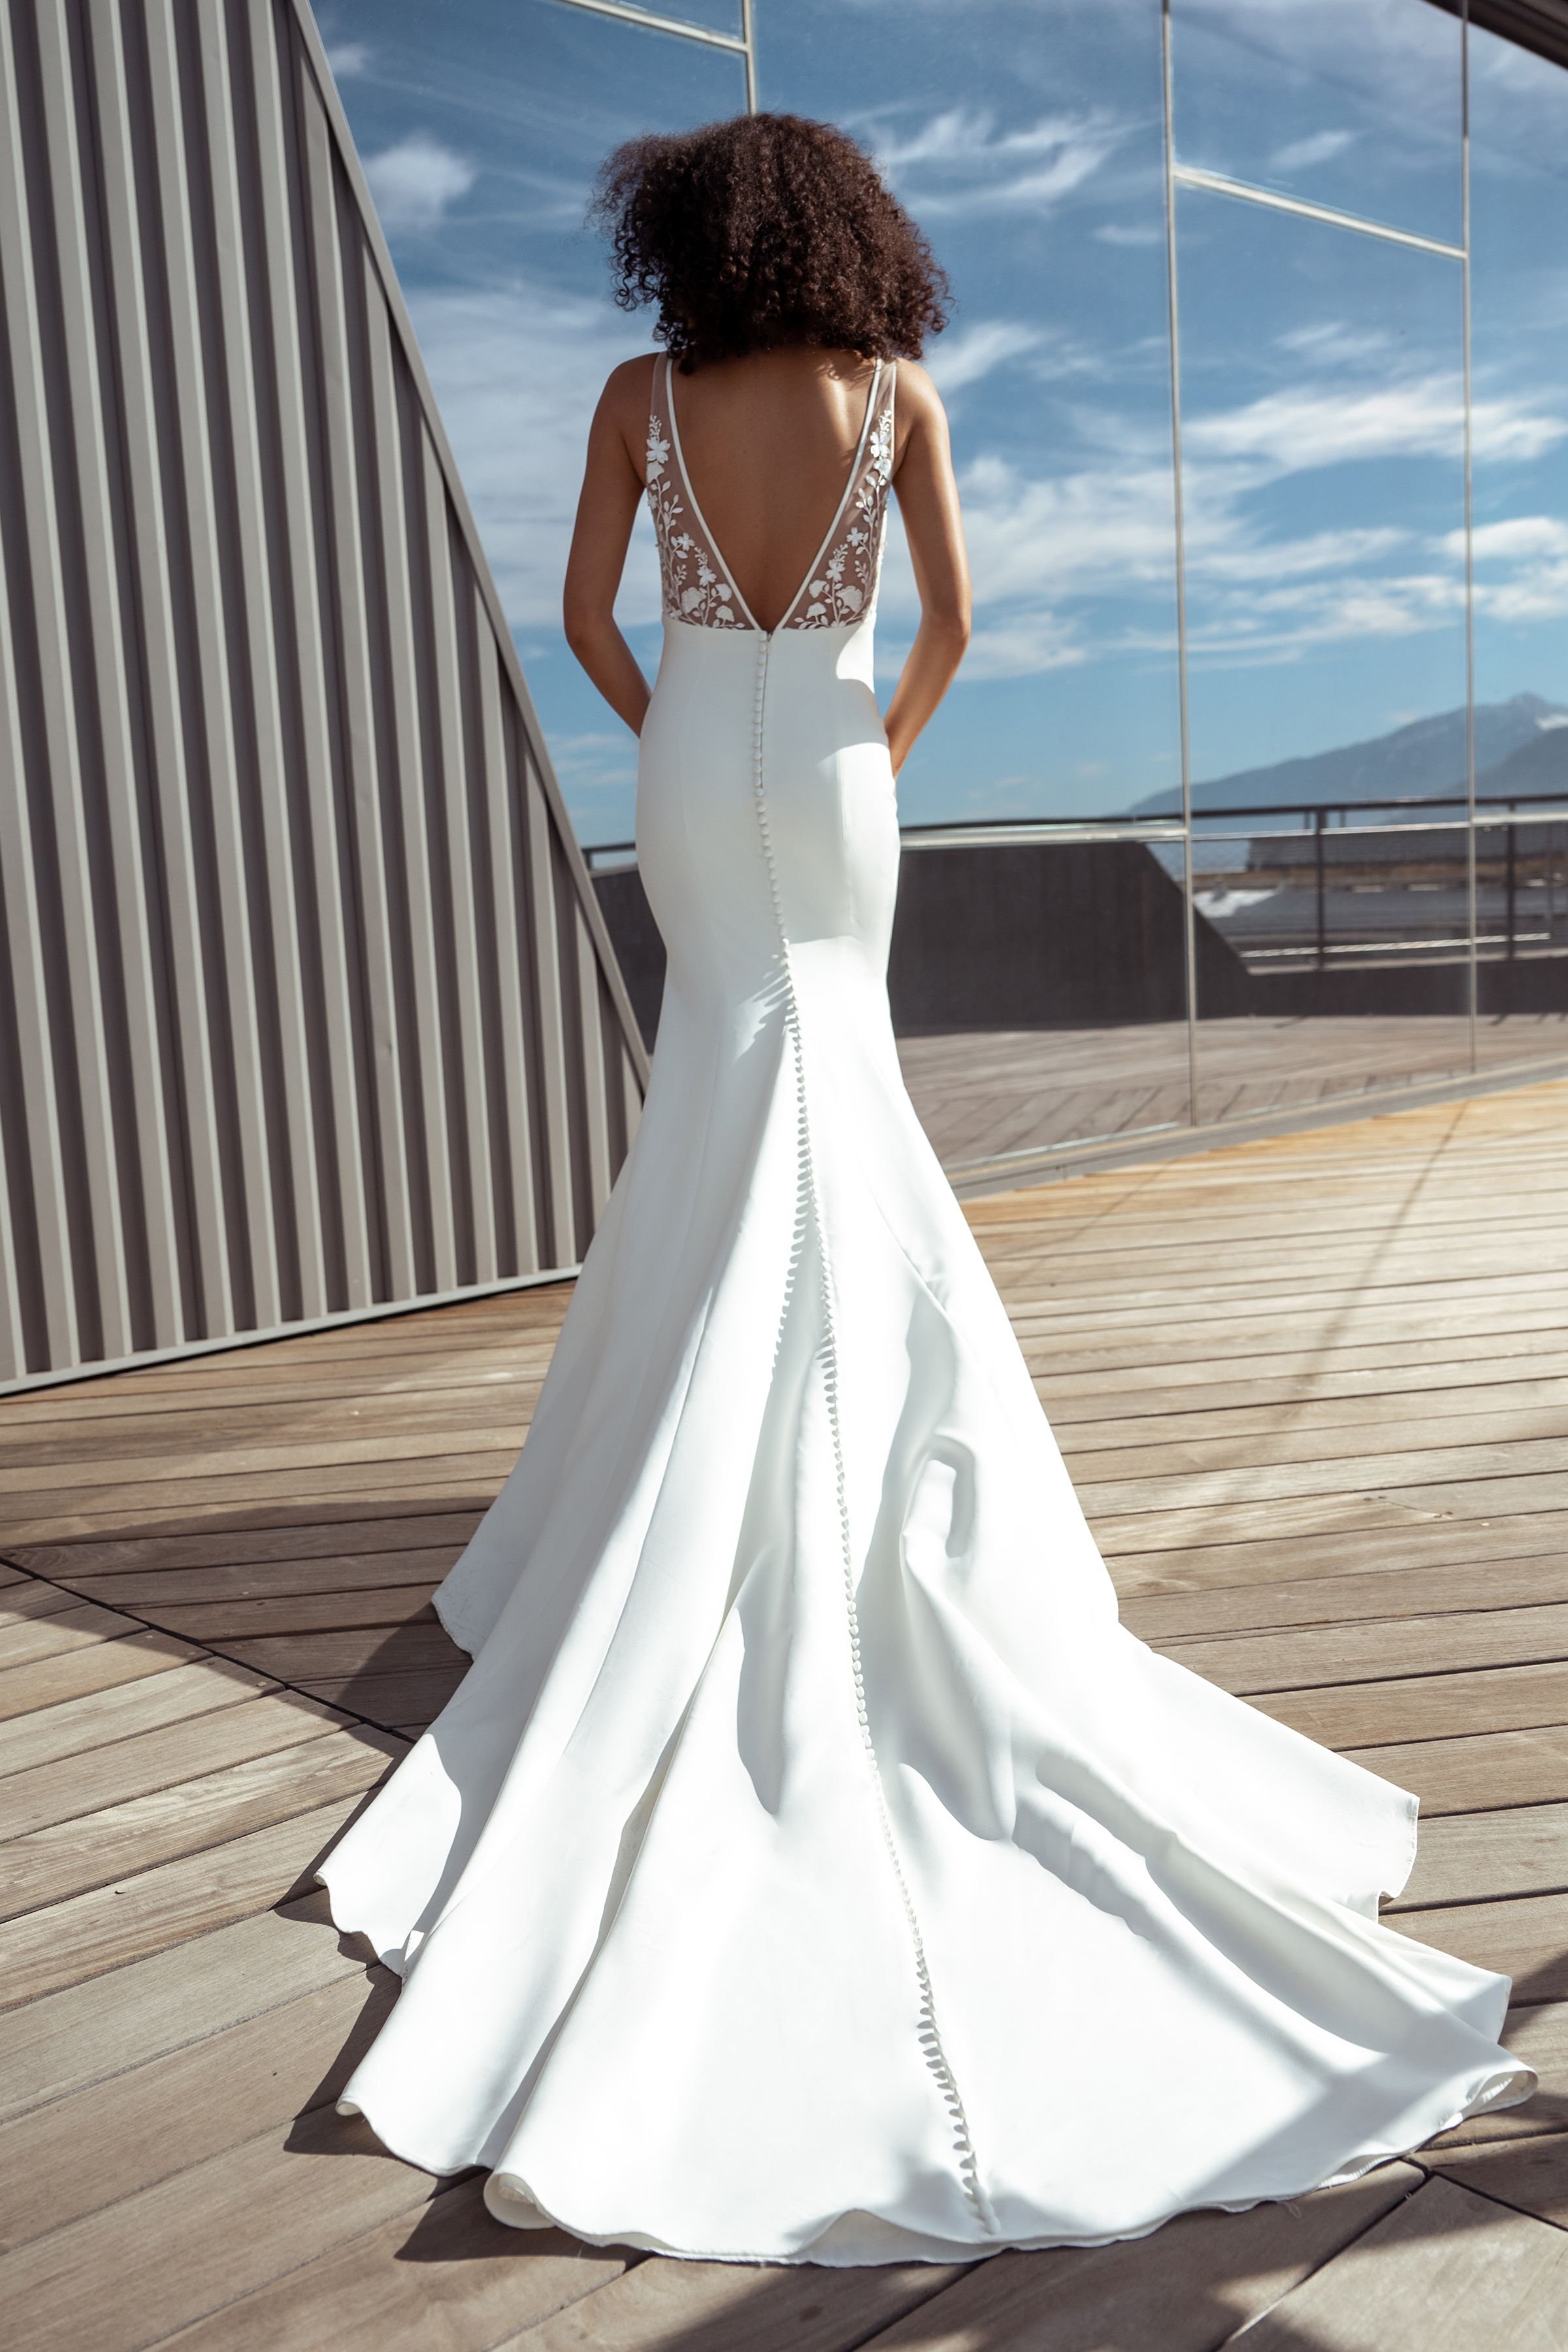 blanc-de-blanc-bridal-boutique-pittsburgh-dress-wedding-gown-Monroe..jpeg